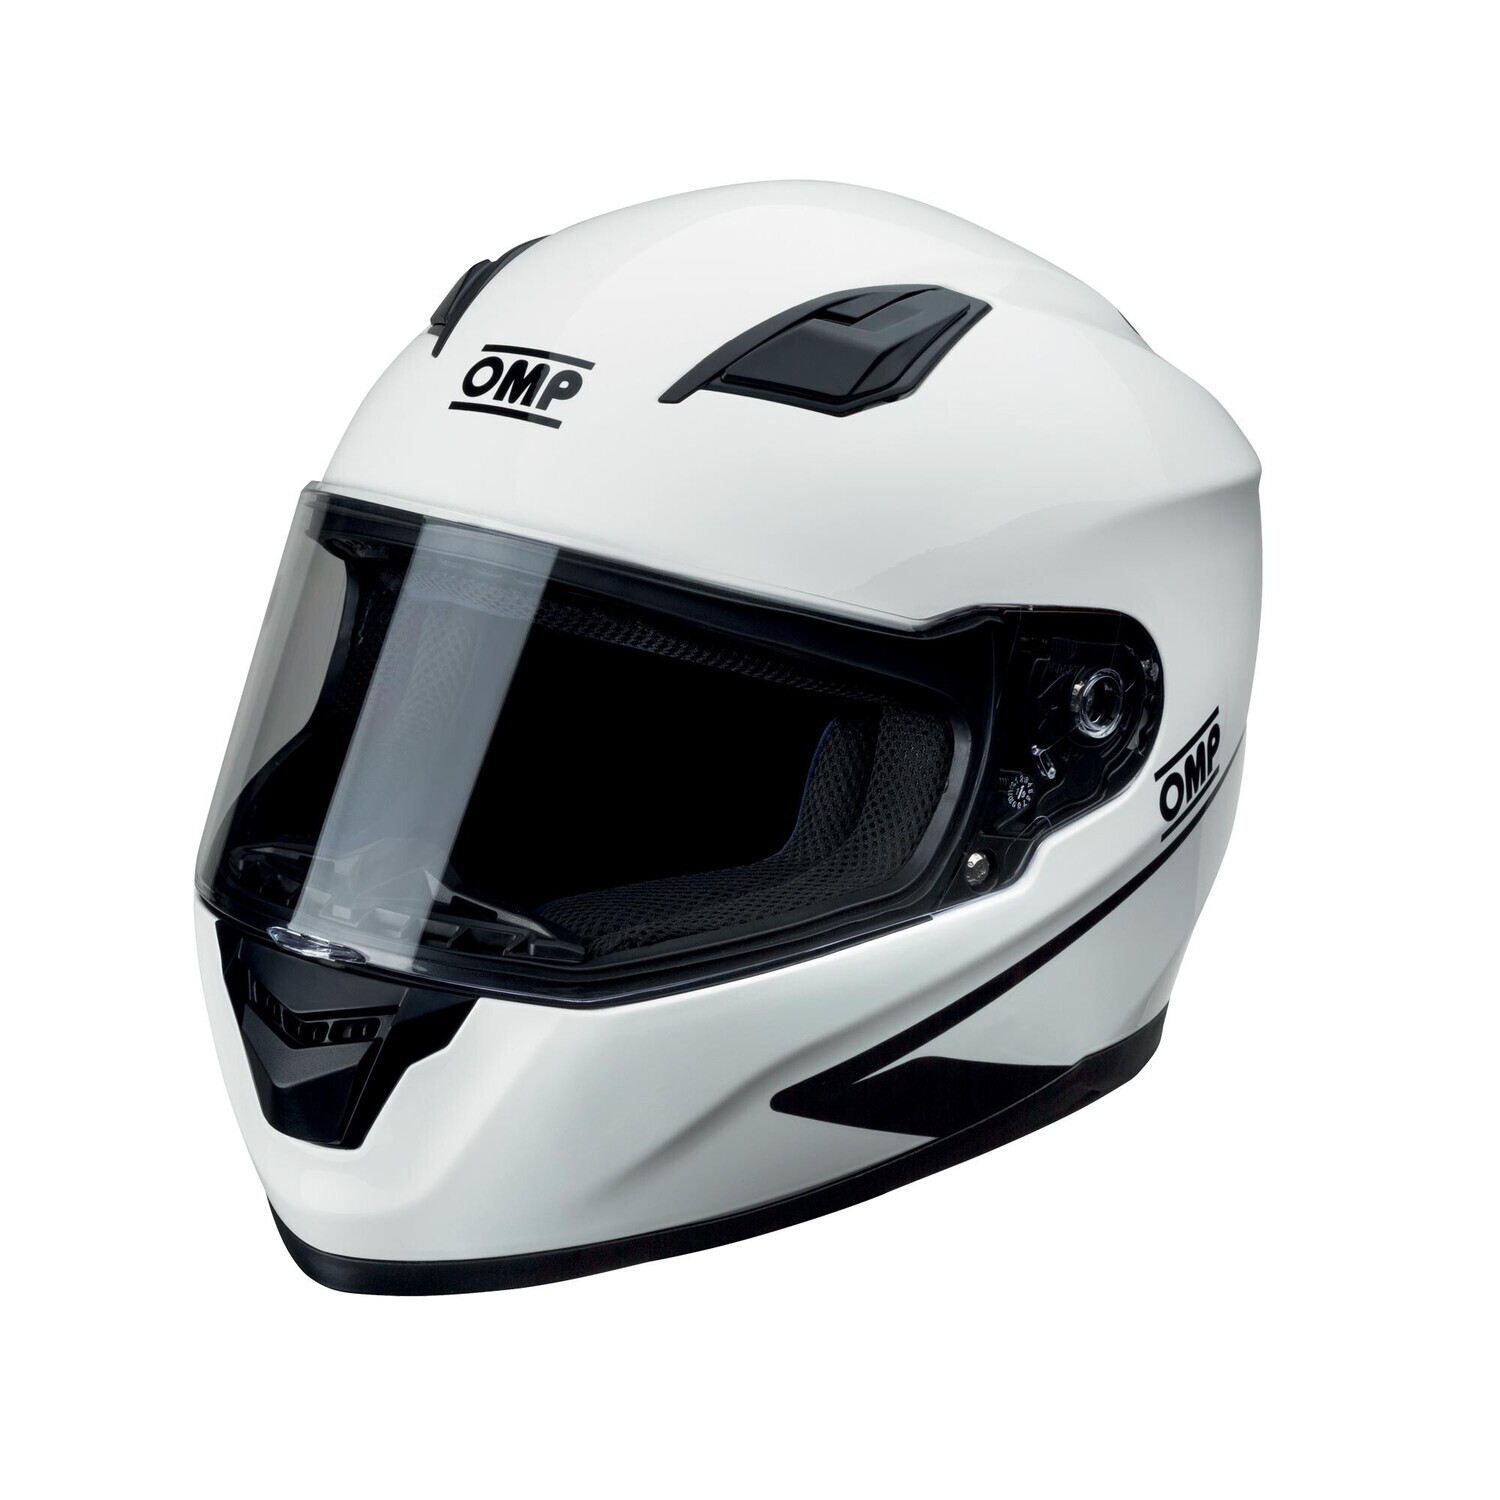 OMP Circuit Evo helmet